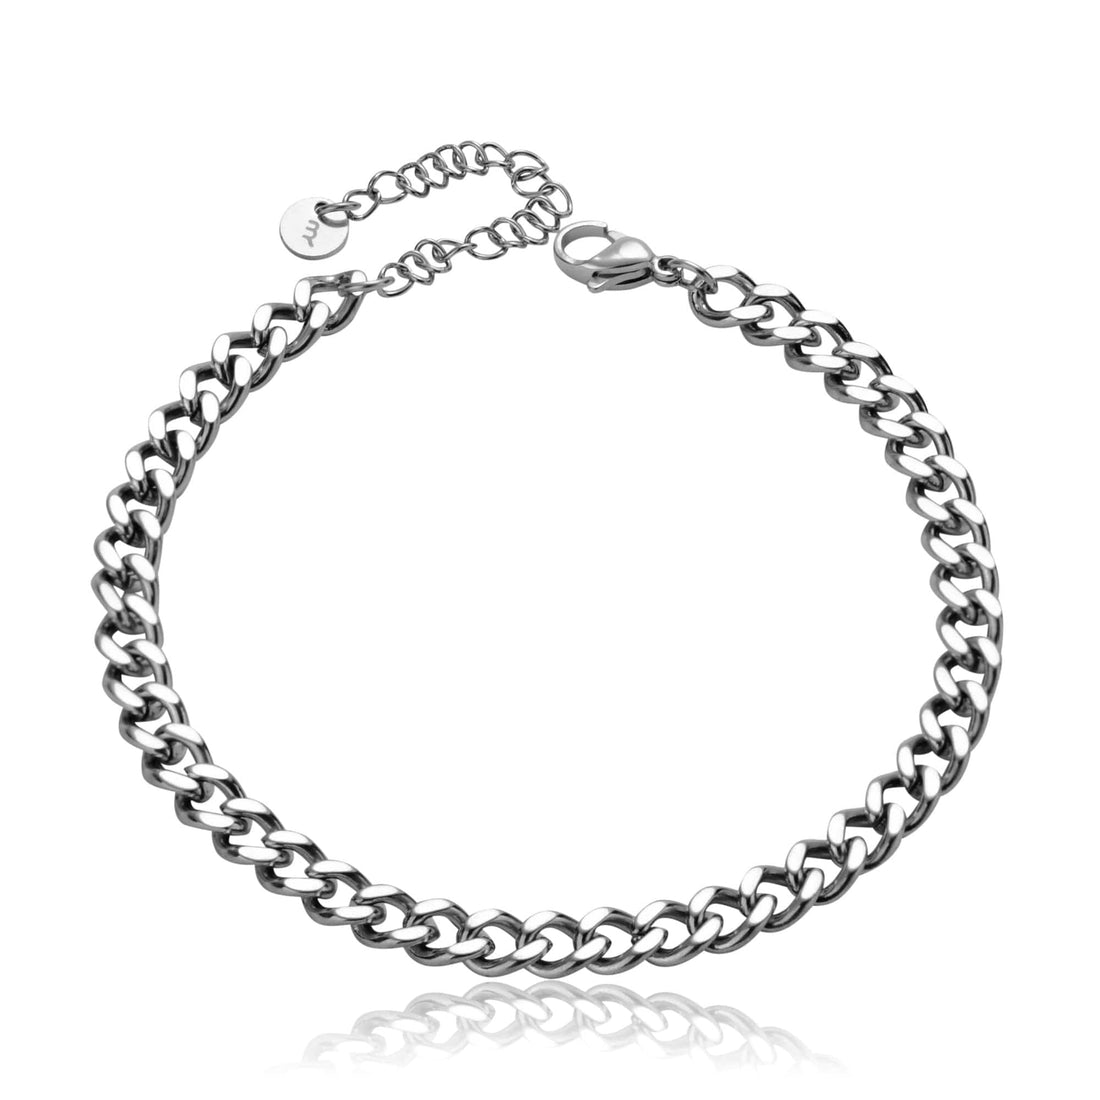 bianco rosso Bracelet Gold Chain Bracelet cyprus greece jewelry gift free shipping europe worldwide